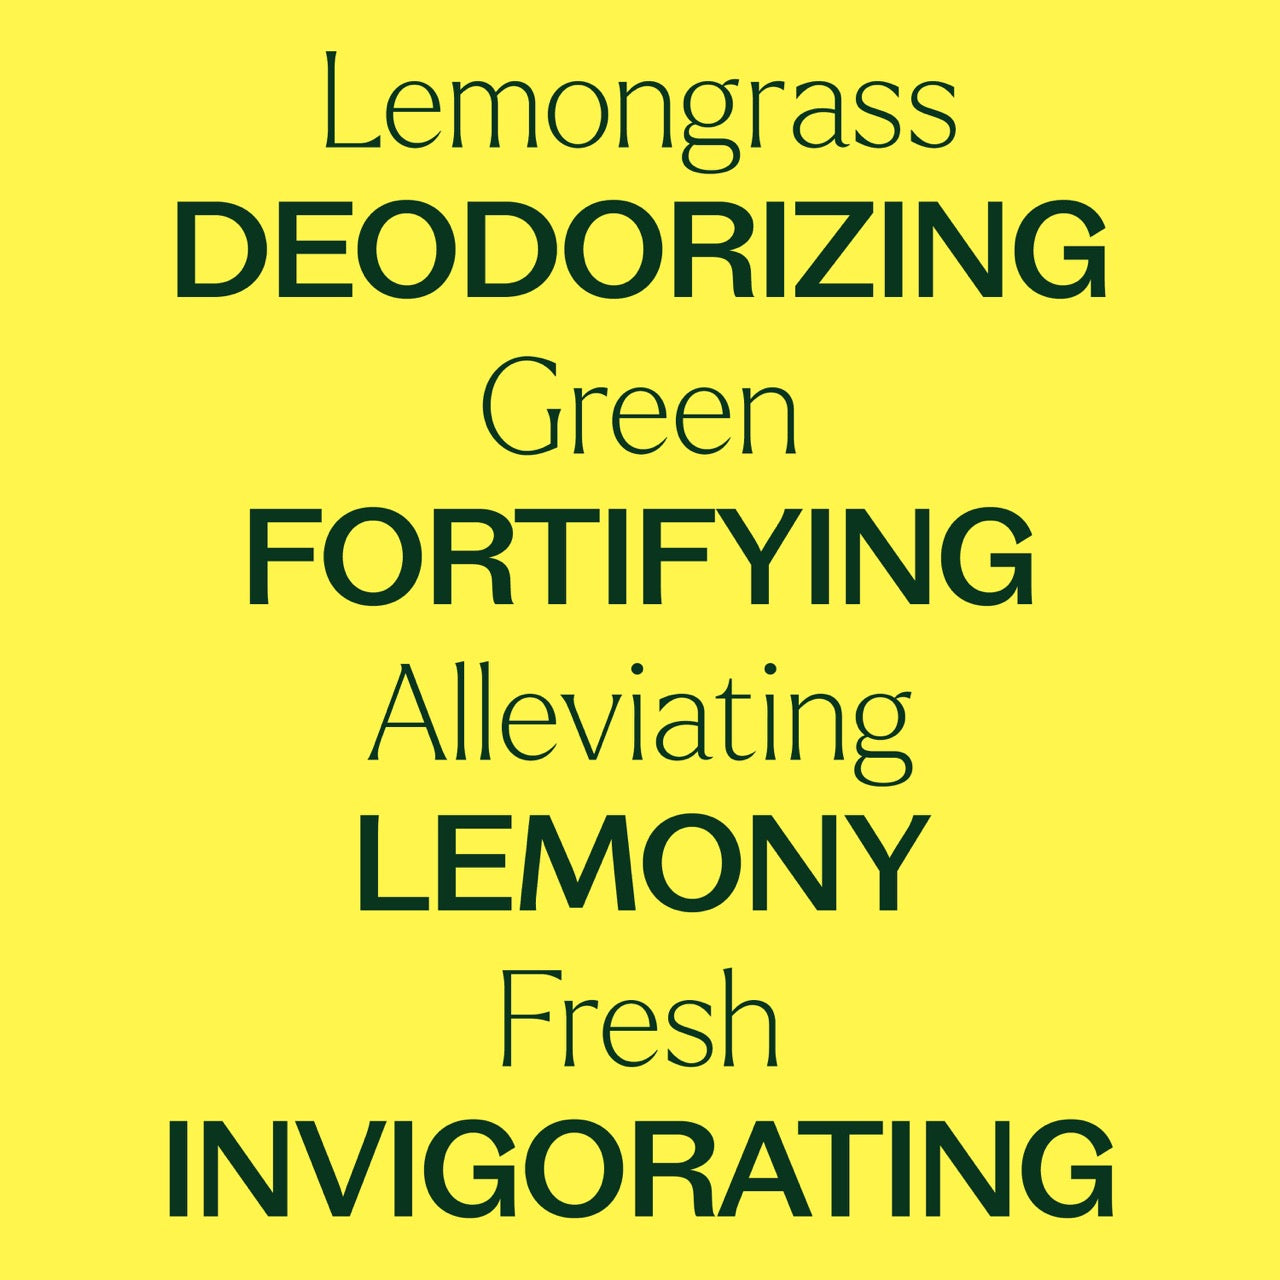 Lemongrass Essential Oil key features: deodorizing, green, fortifying, alleviating, lemony, fresh, invigorating